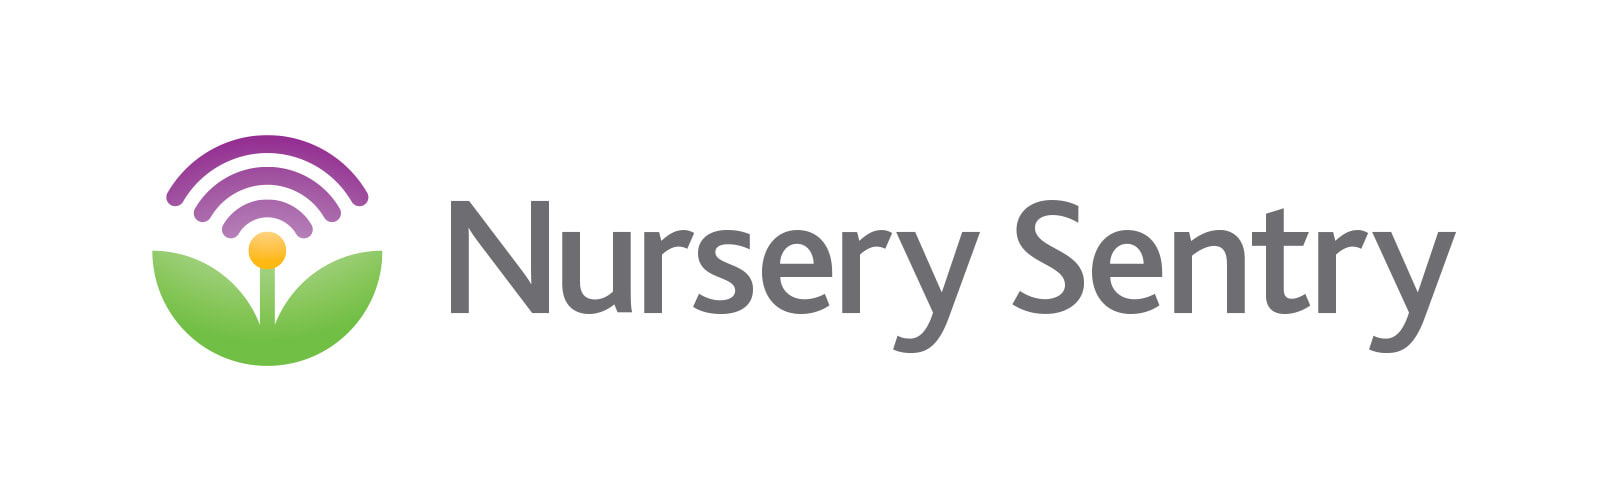 Nursery Sentry Logo